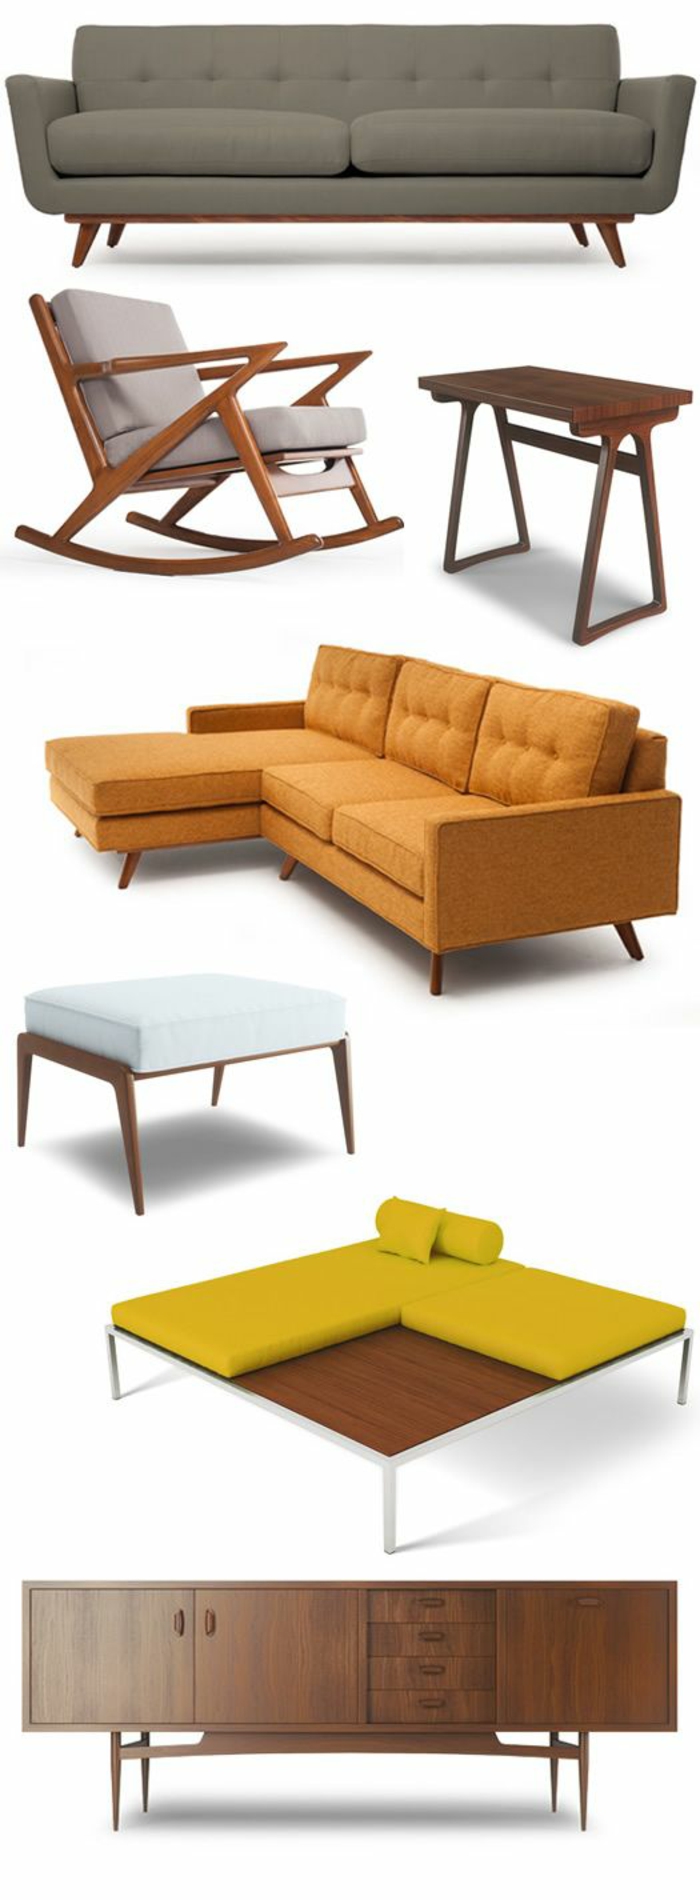 skandinavische möbel wohnzimmer möbel sofa sessel